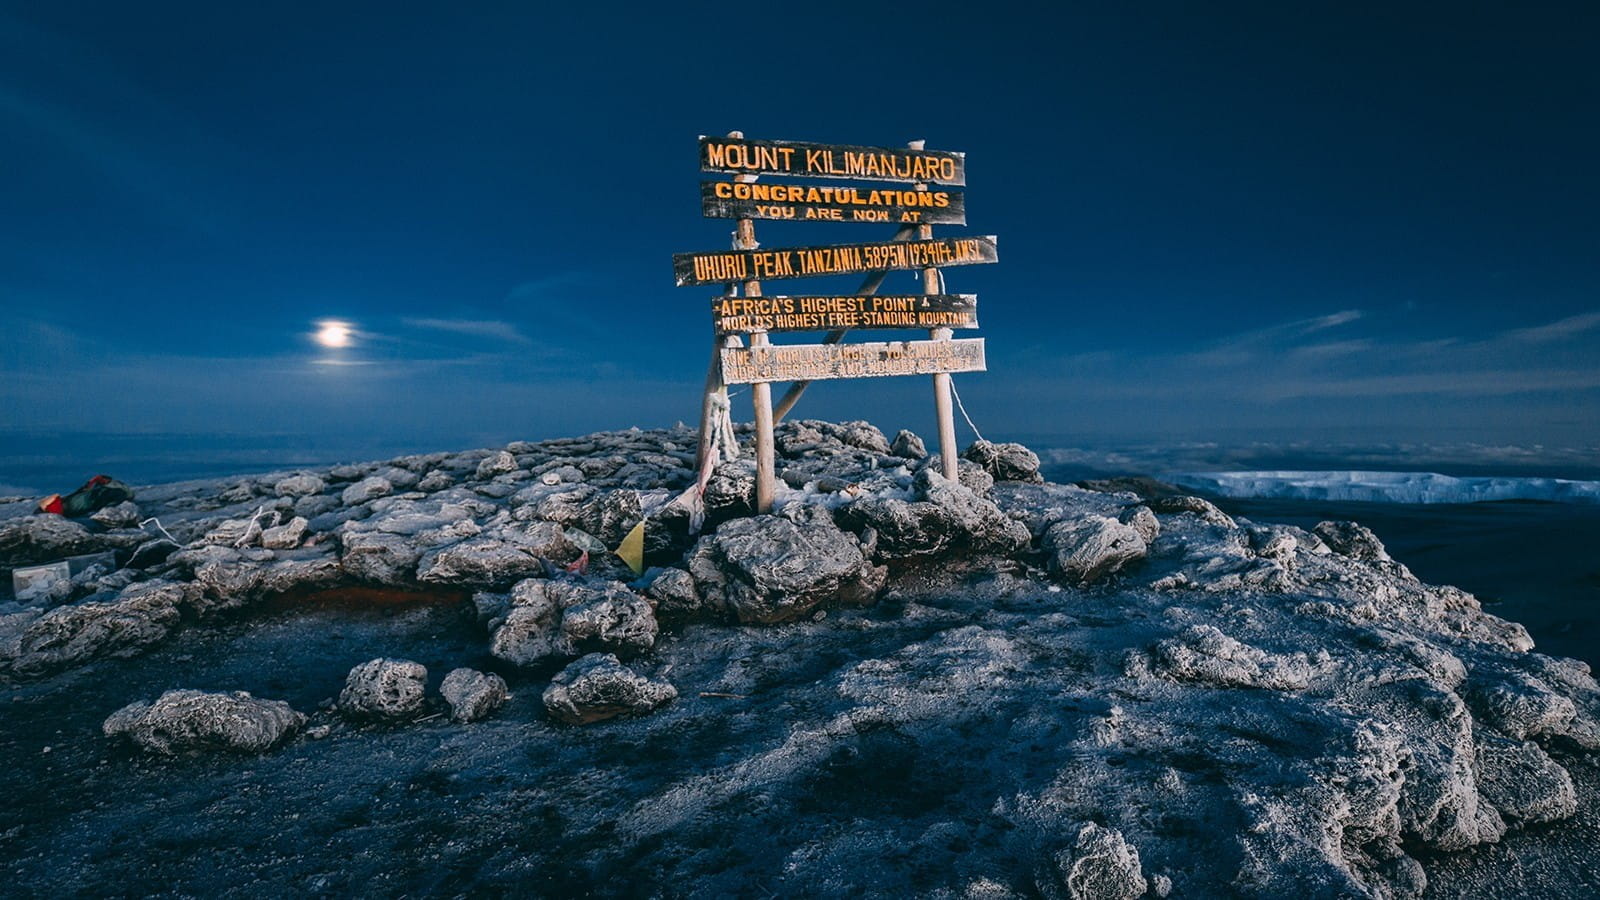 Climbing Kilimanjaro for tax charities article image